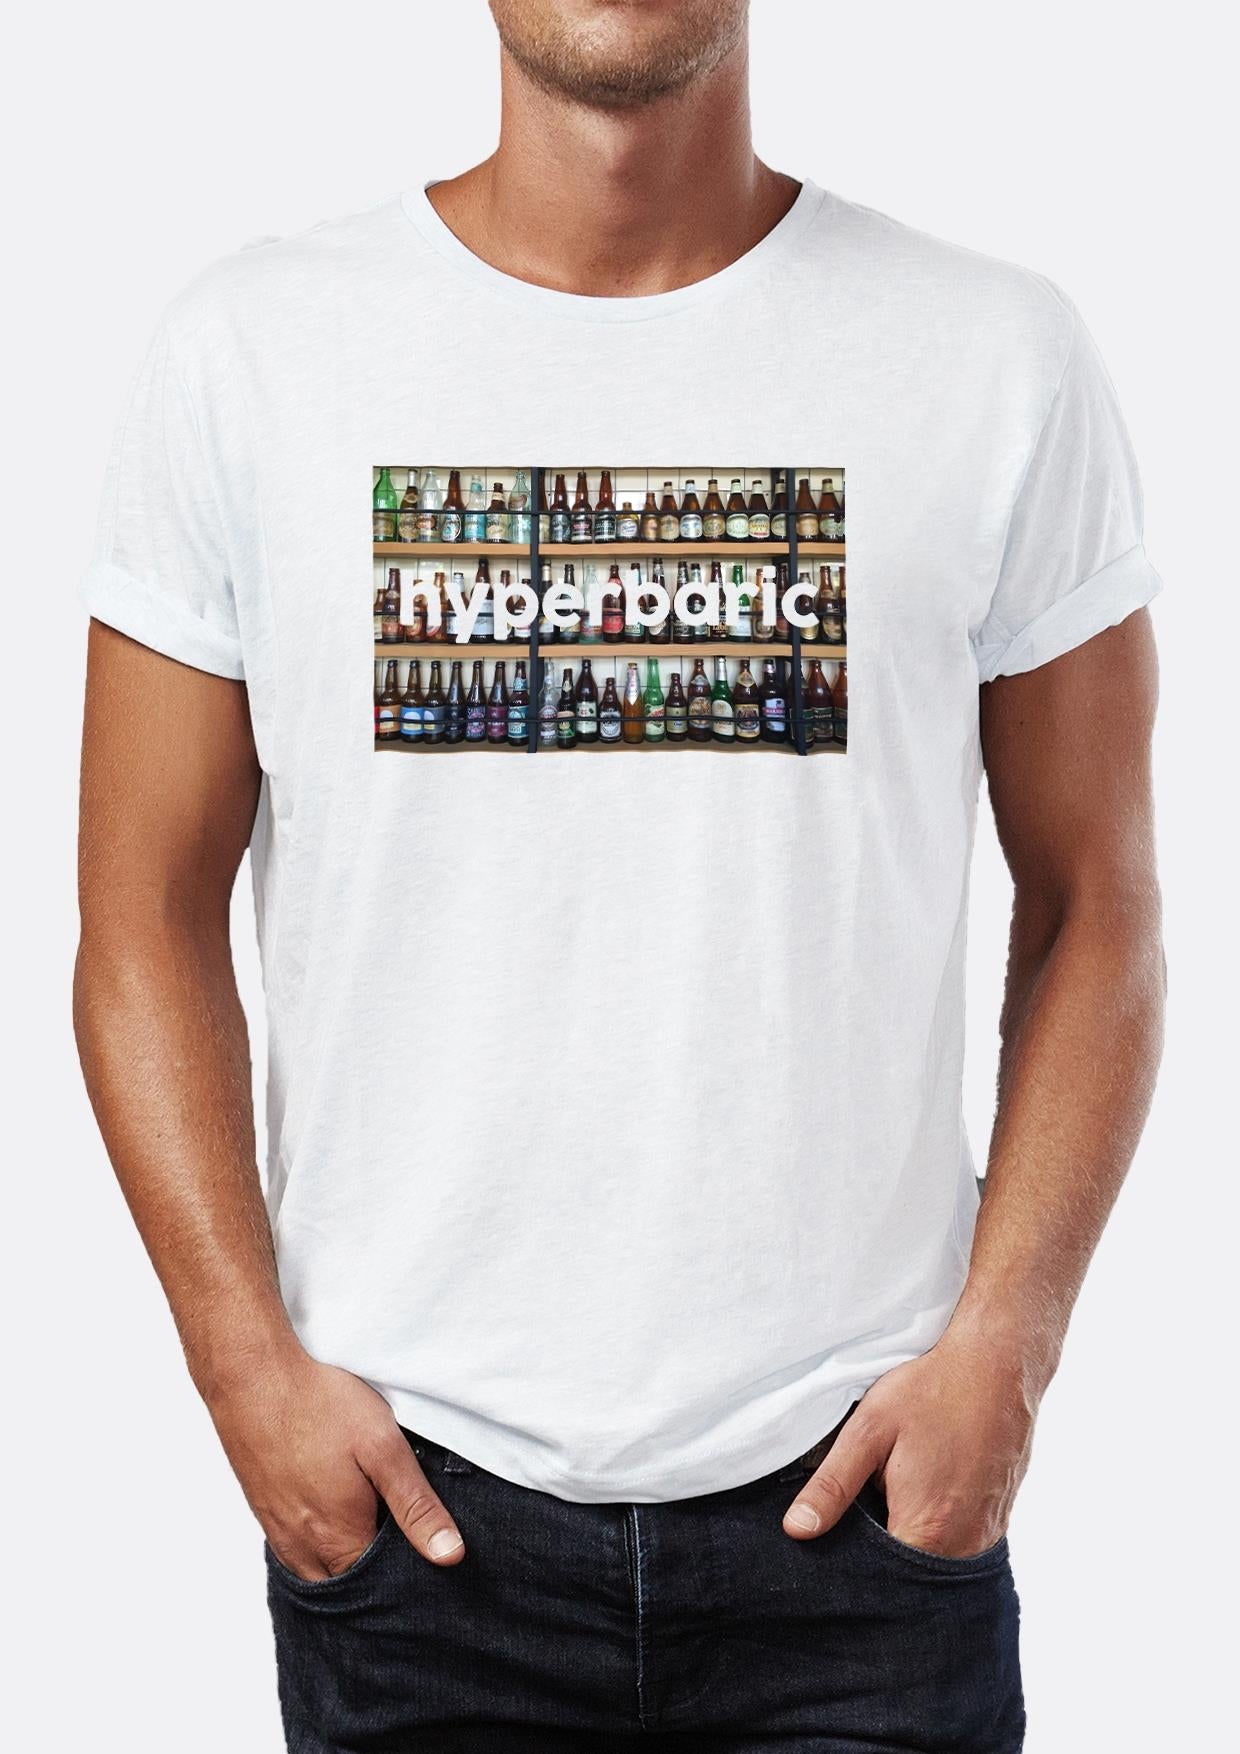 Hyperbaric printed Crew Neck collar men T -shirt on bottle visuals